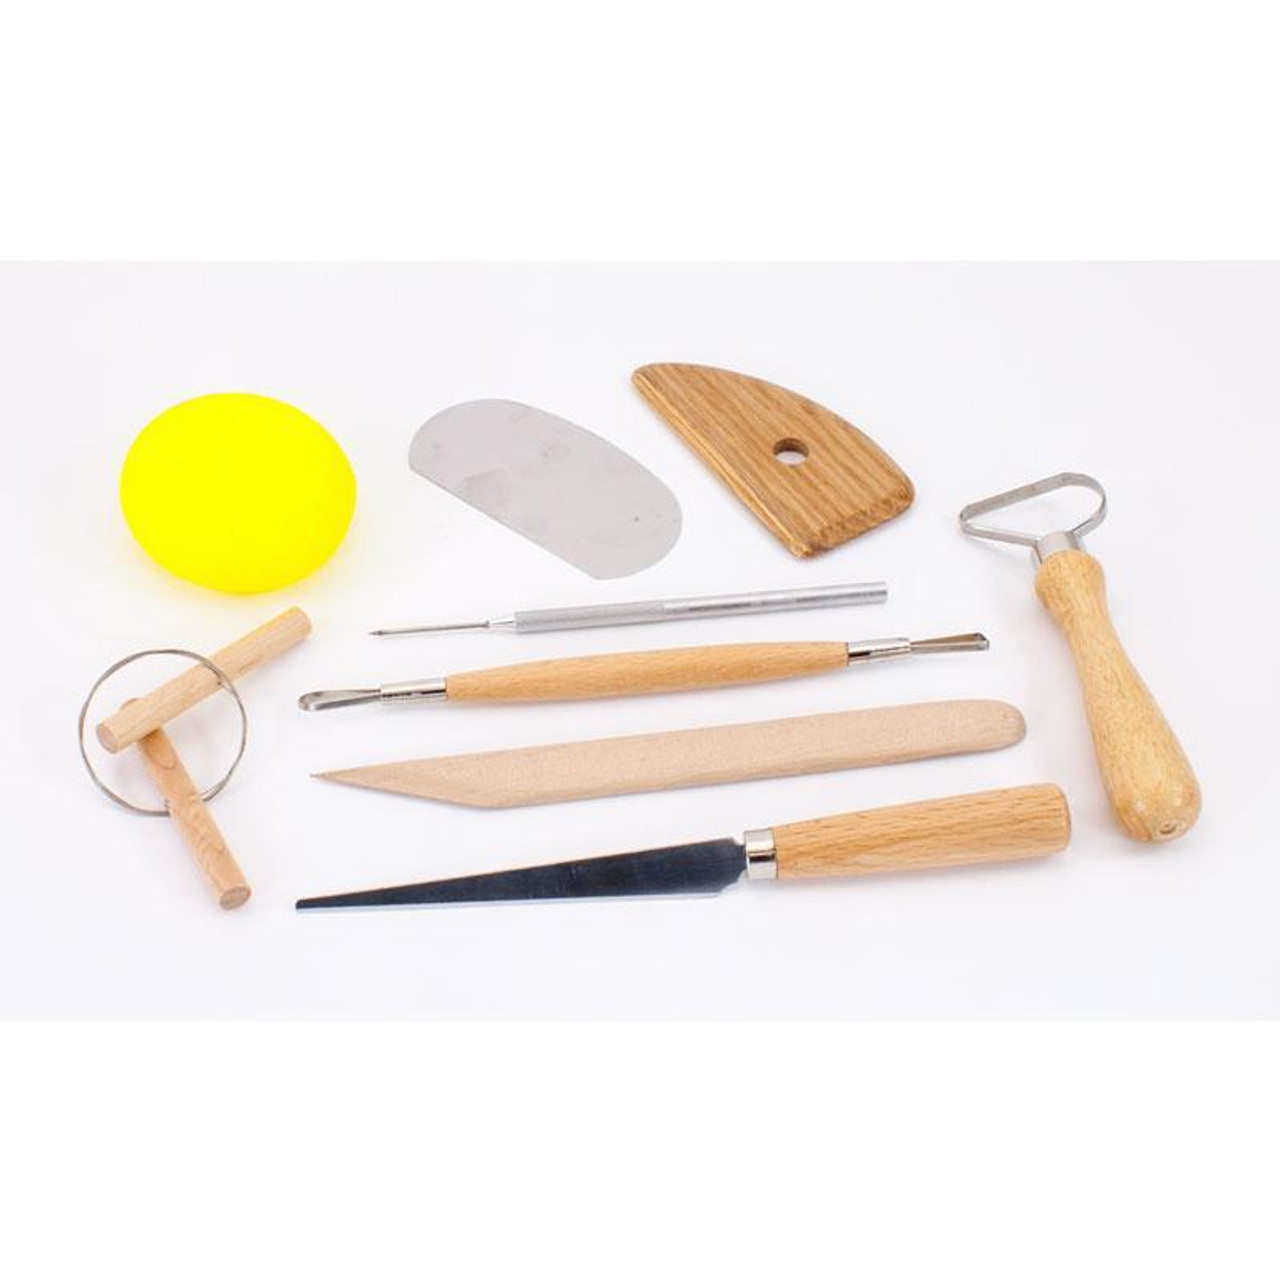 PTK Pottery 8 Piece Tool Kit